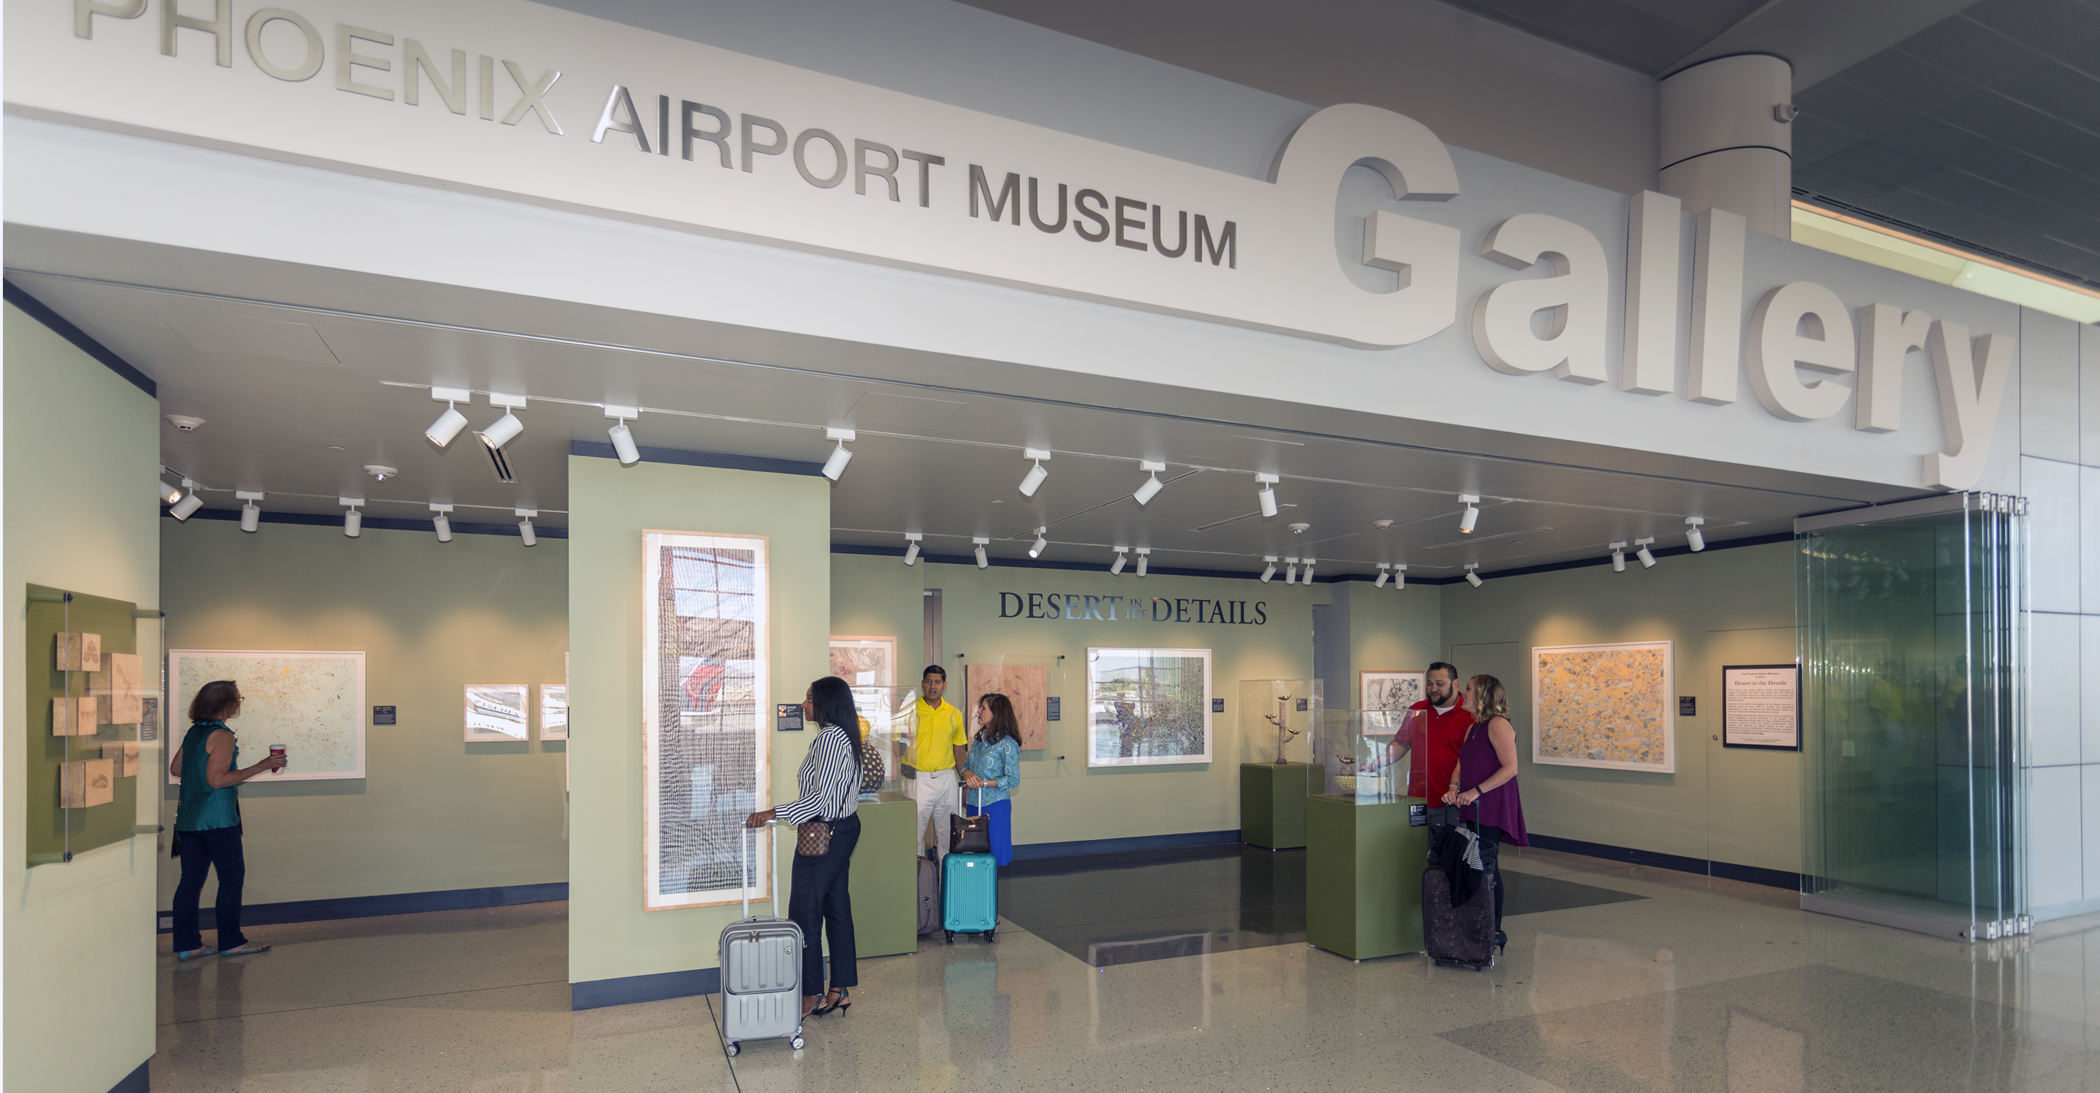 Terminal 3 Airport Museum Gallery